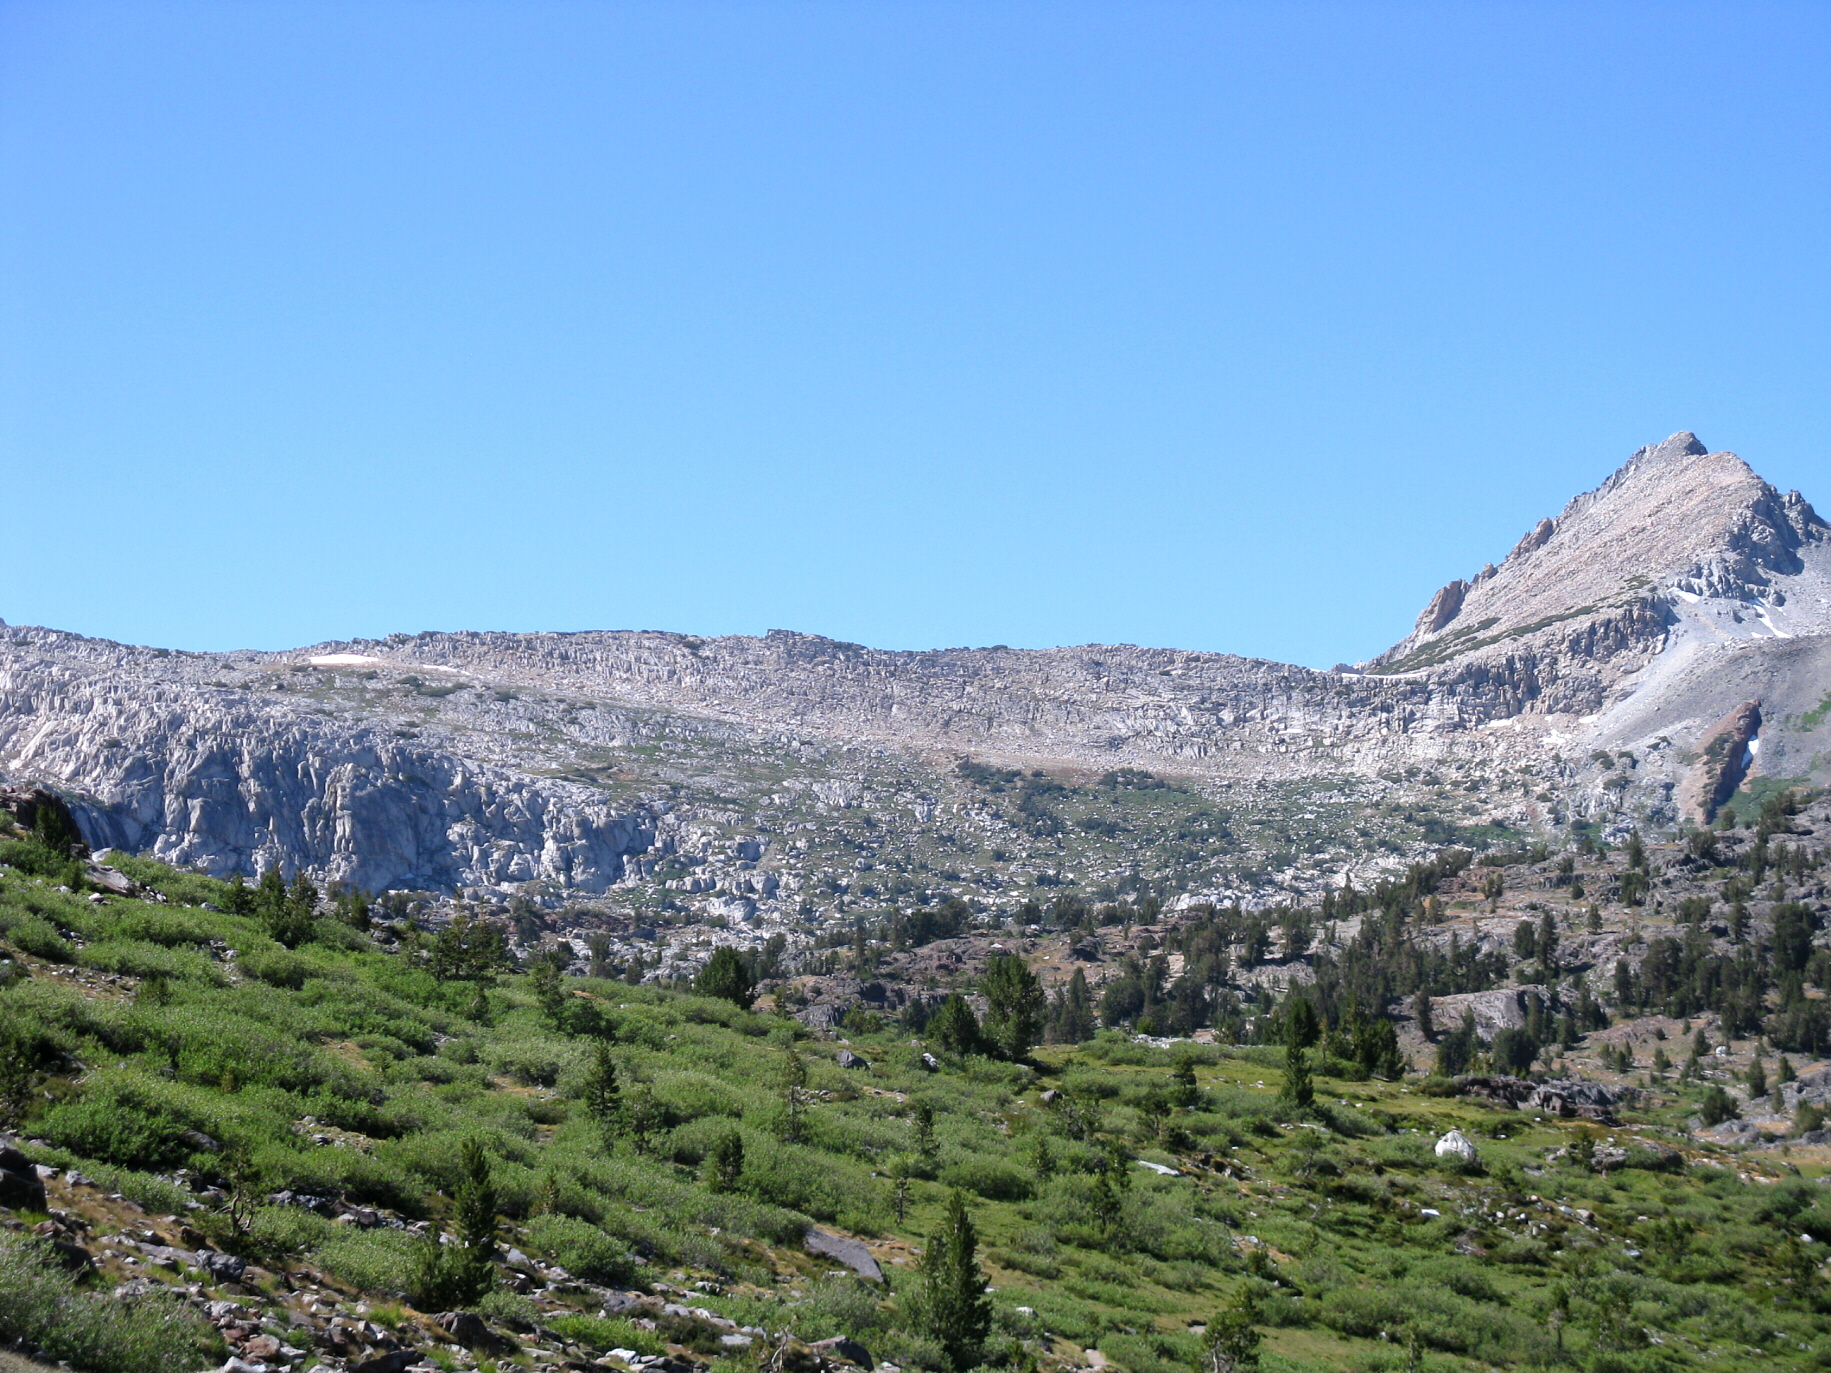 Yosemite 2010 173